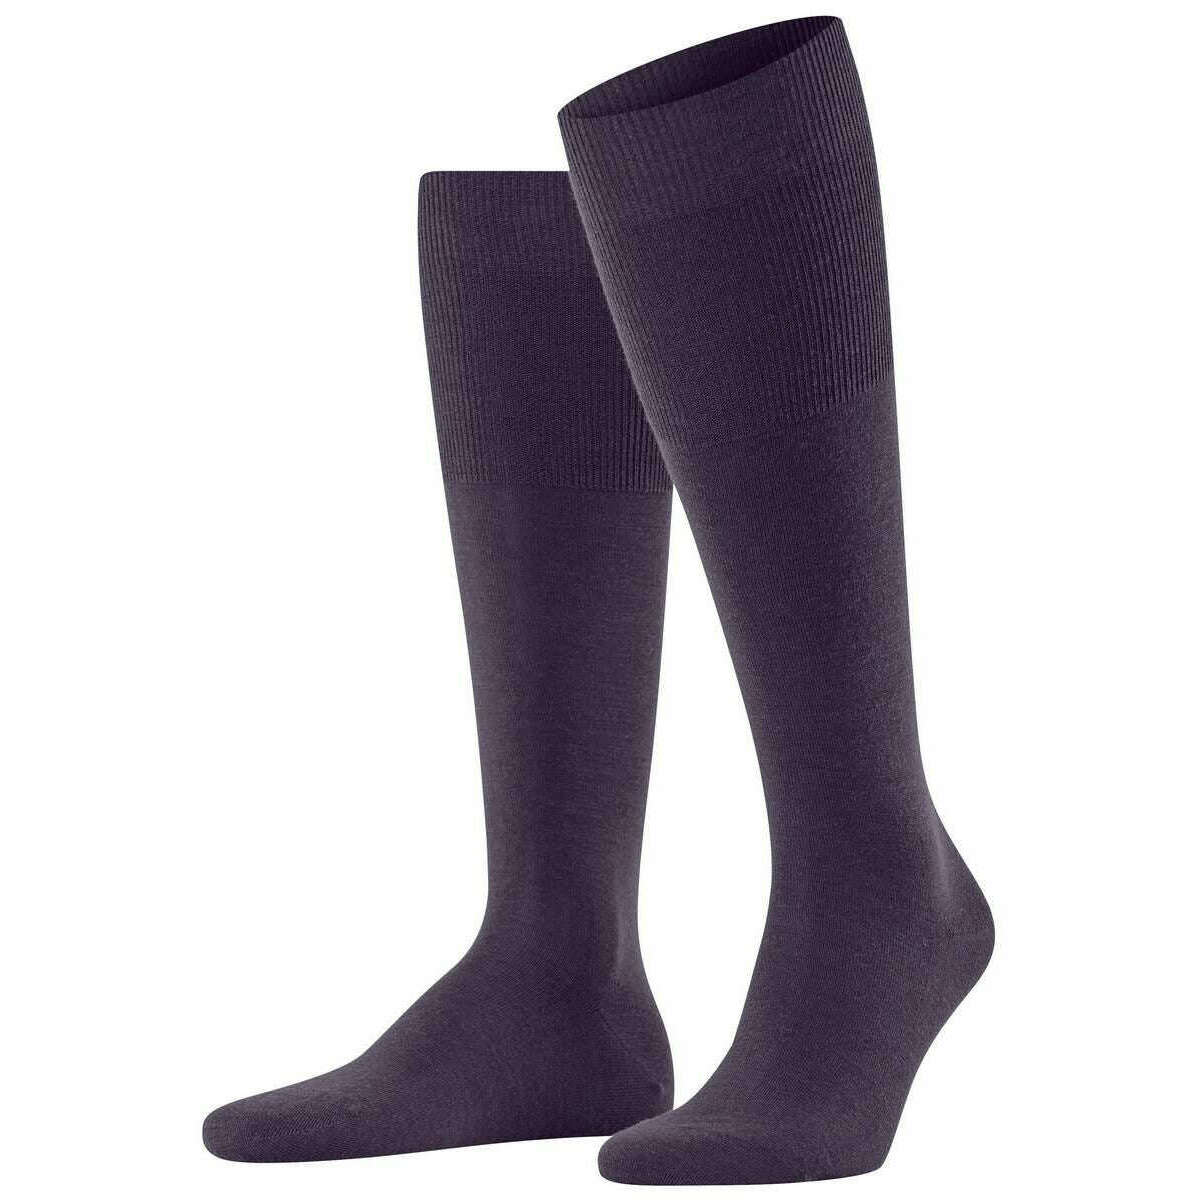 Falke Airport Knee High Socks - Amethyst Lilac